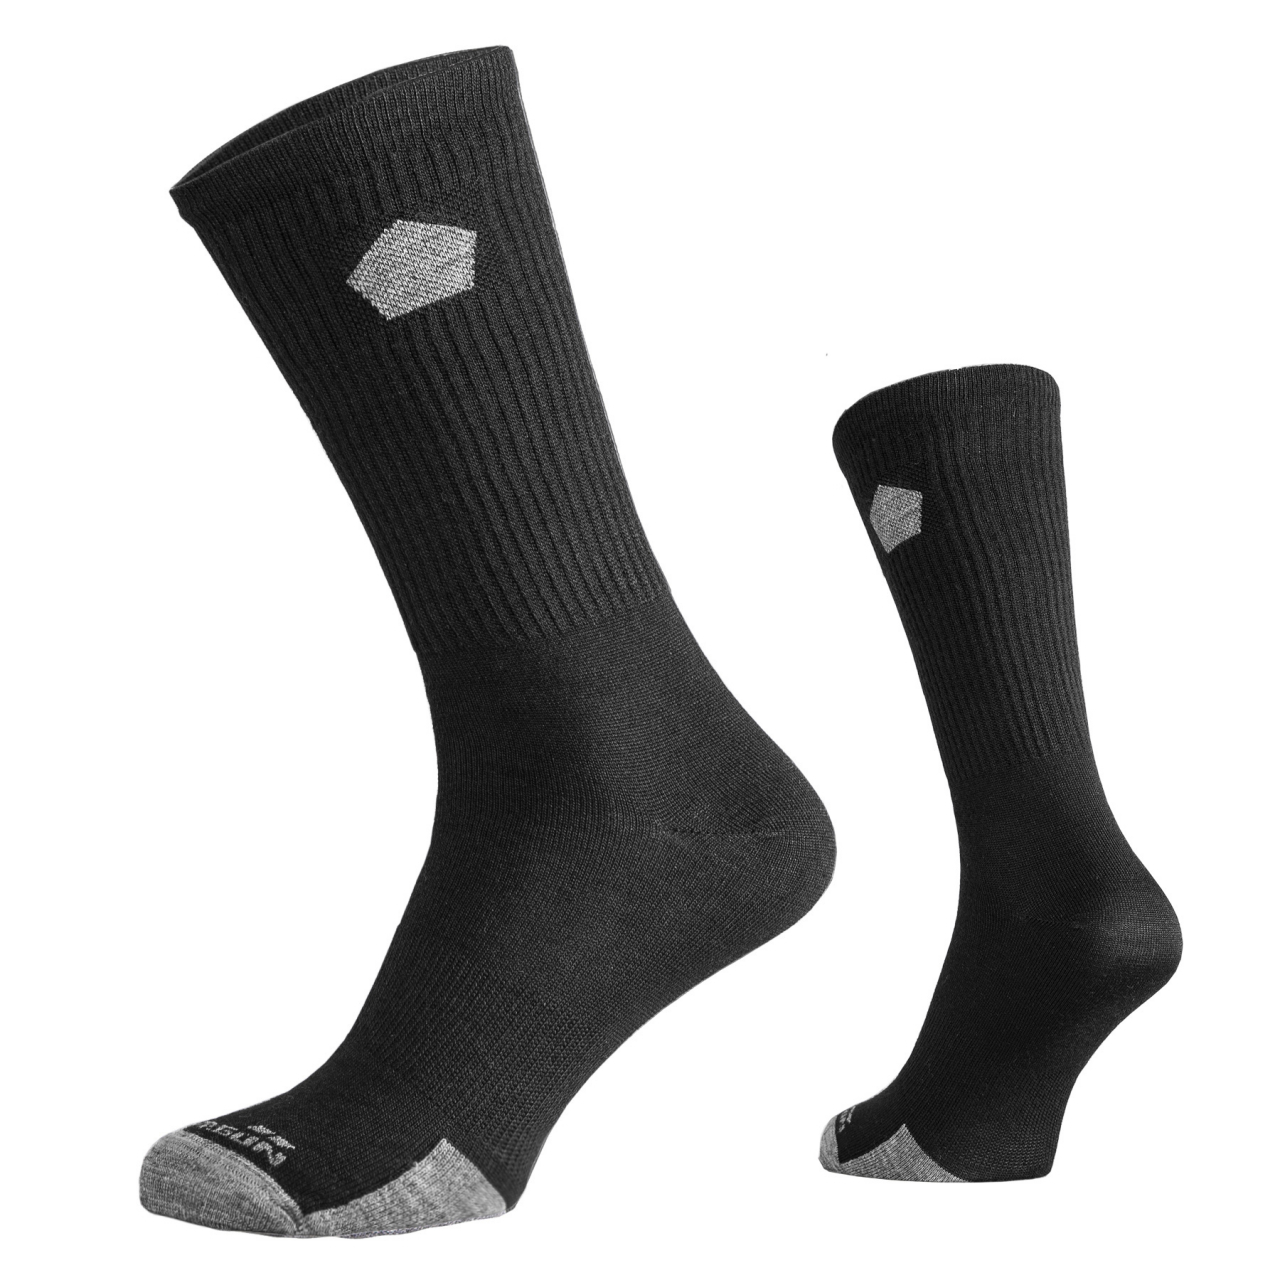 Ponožky Pentagon Alpine Merino Light - černé, 45-47